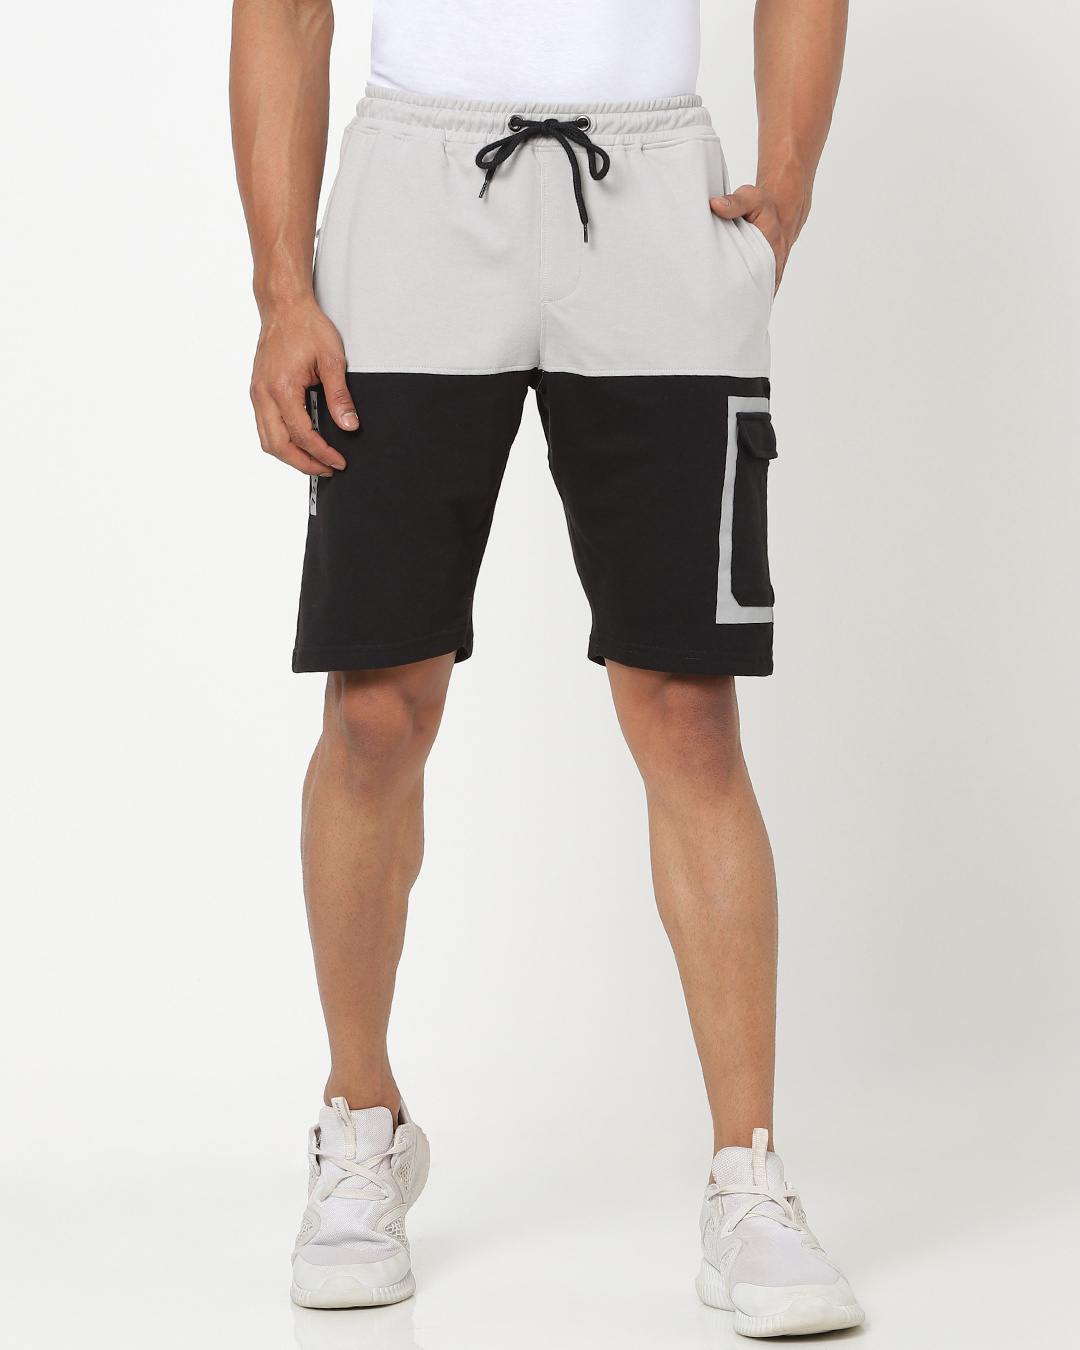 Shop Men's Black and Grey Color Block Shorts-Back